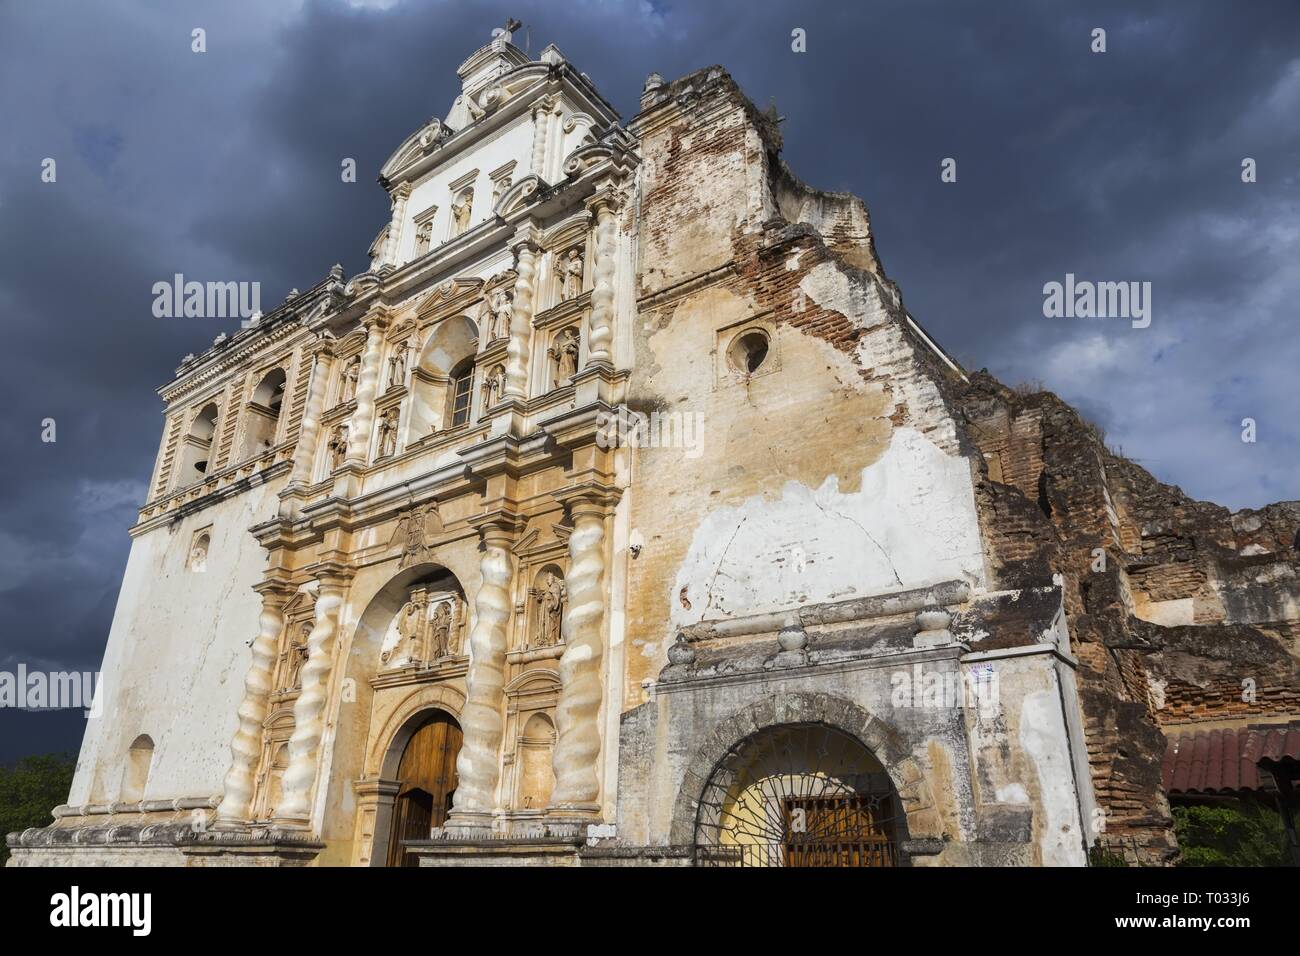 Iglesia San Francisco el Grande Spanish Catholic Church Building Exterior in Old City Antigua, Guatemala a Unesco World Heritage Site Stock Photo